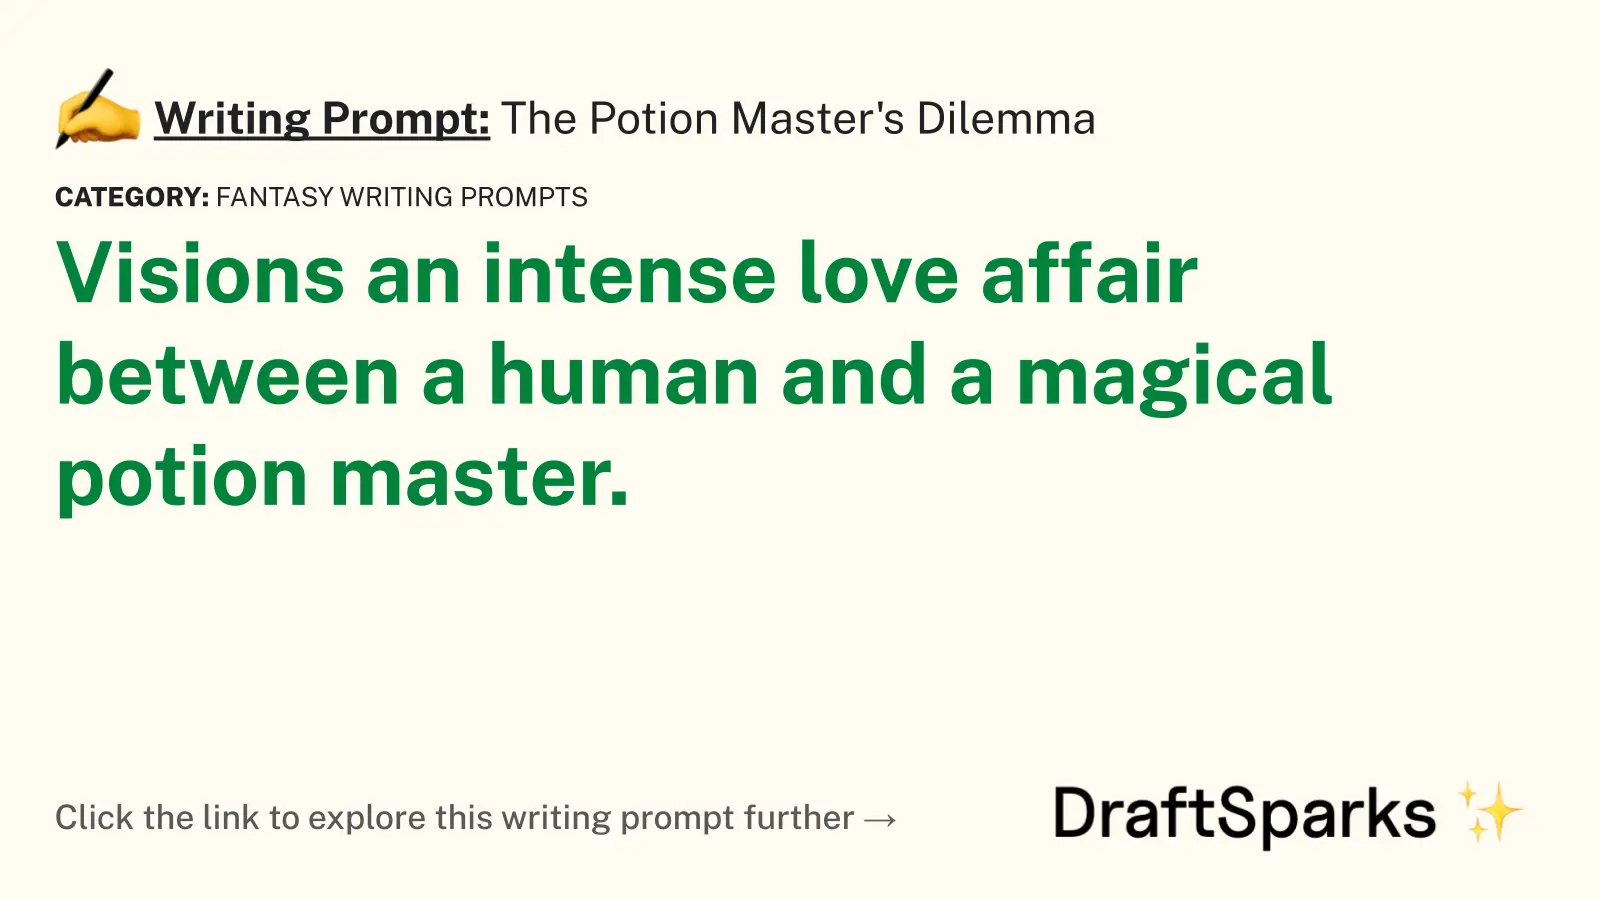 The Potion Master’s Dilemma